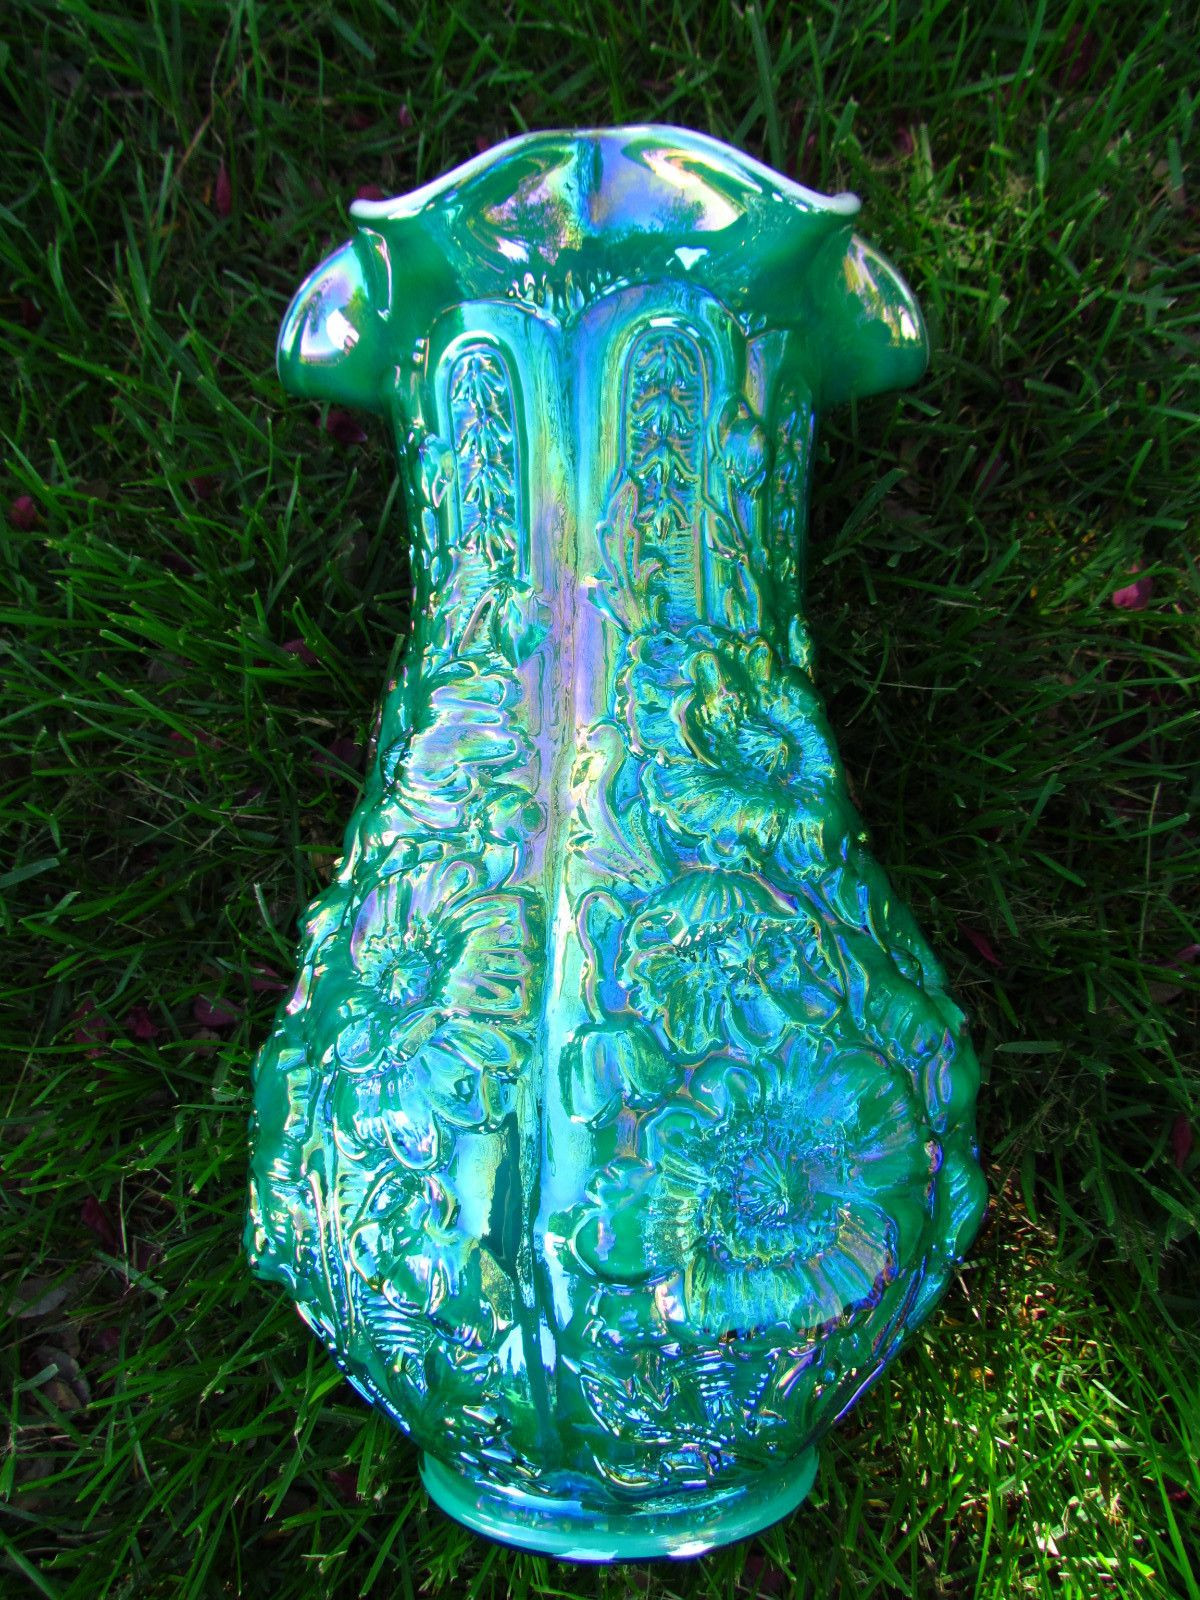 22 Popular Teal Flower Vase 2024 free download teal flower vase of fenton poppy show vase emerald green jpg colored glass cut regarding fenton poppy show vase emerald green jpg